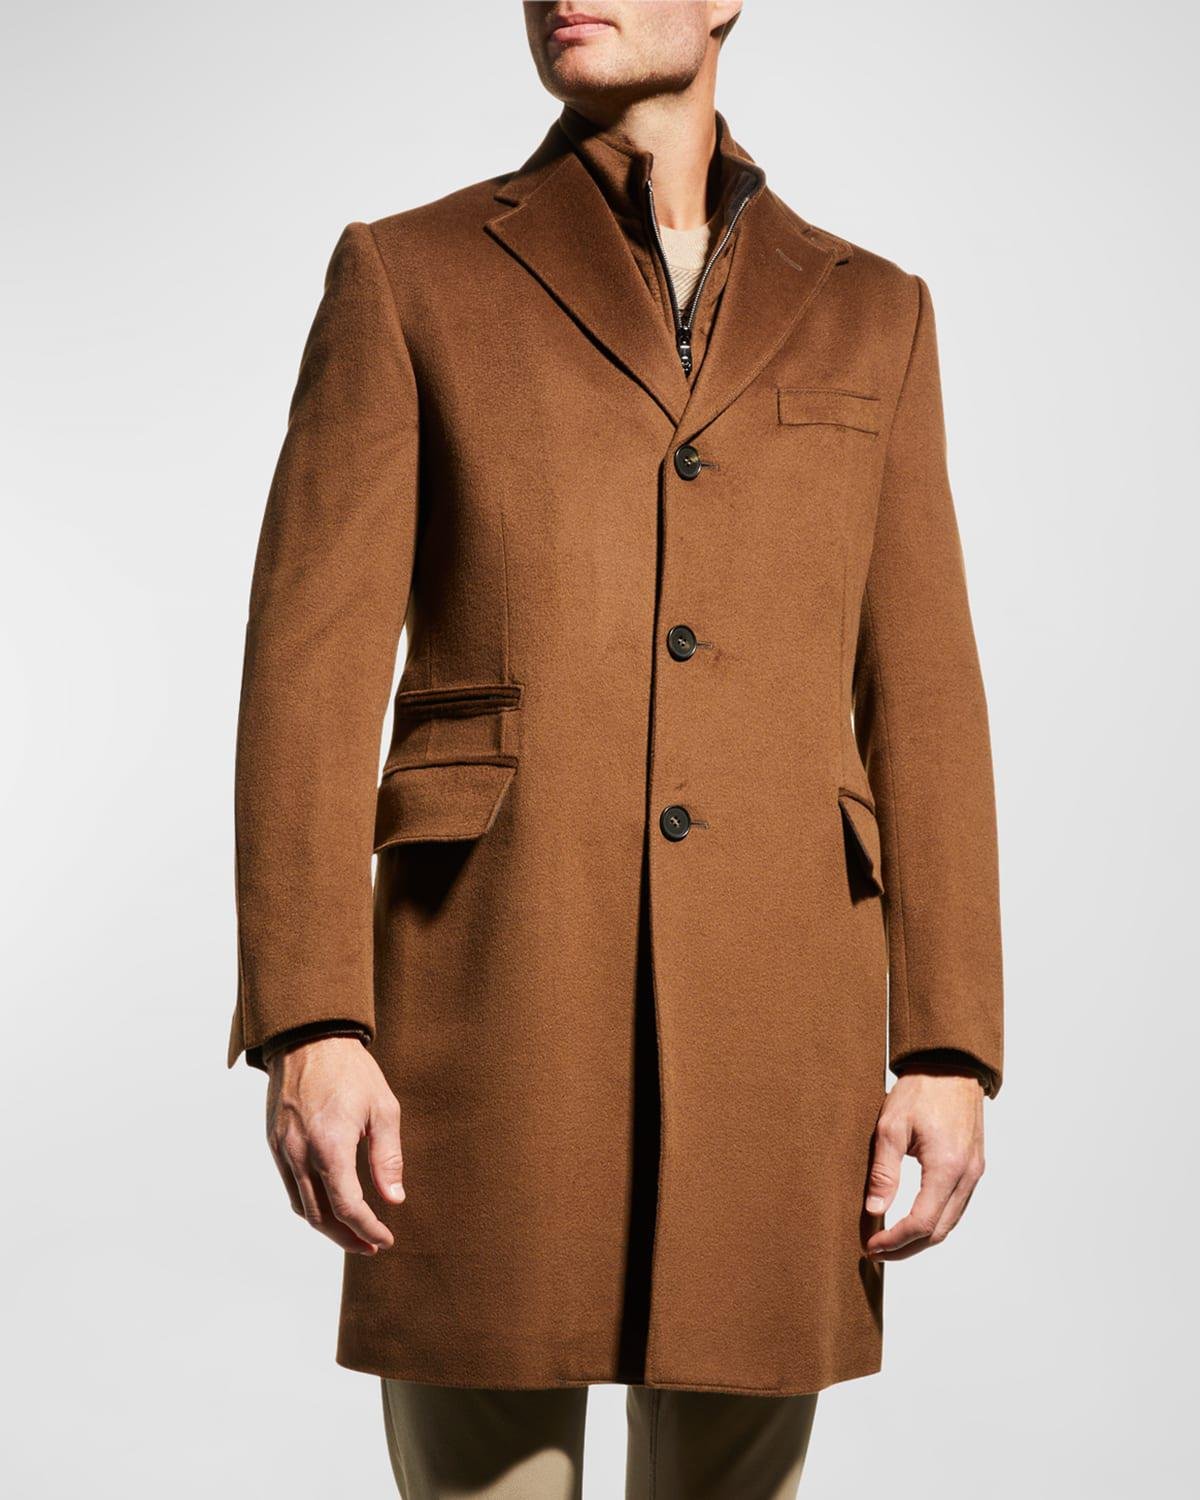 Men's Wool Topcoat with Removable Bib by CORNELIANI